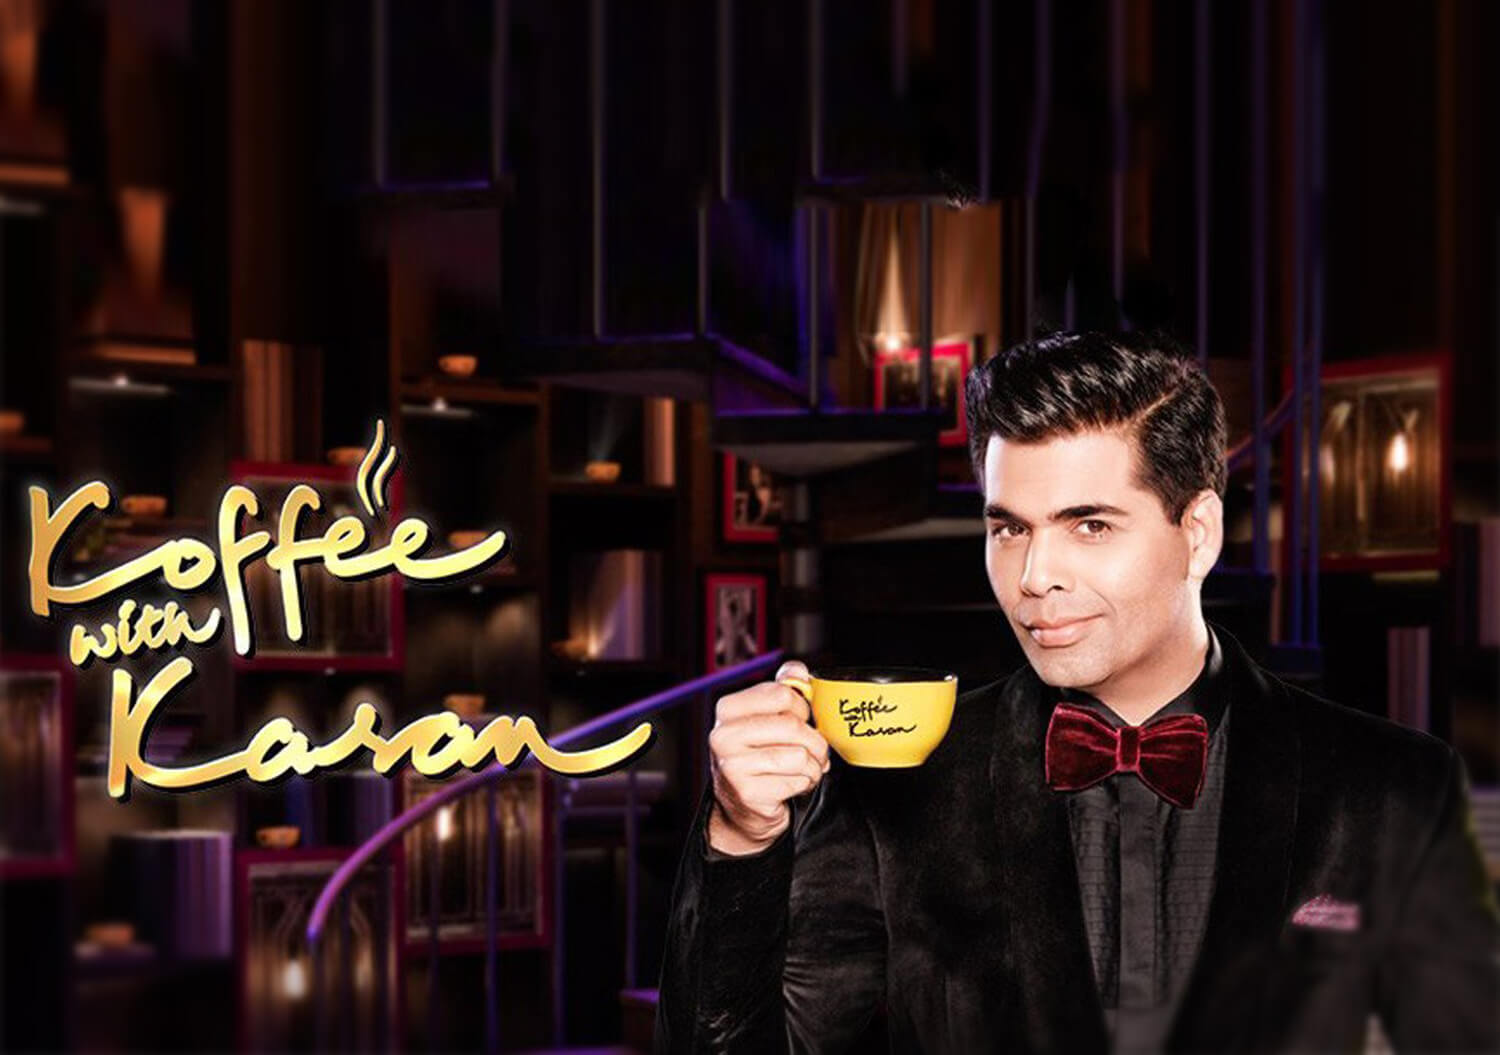 koffee with karan season 6 episode 1 star world